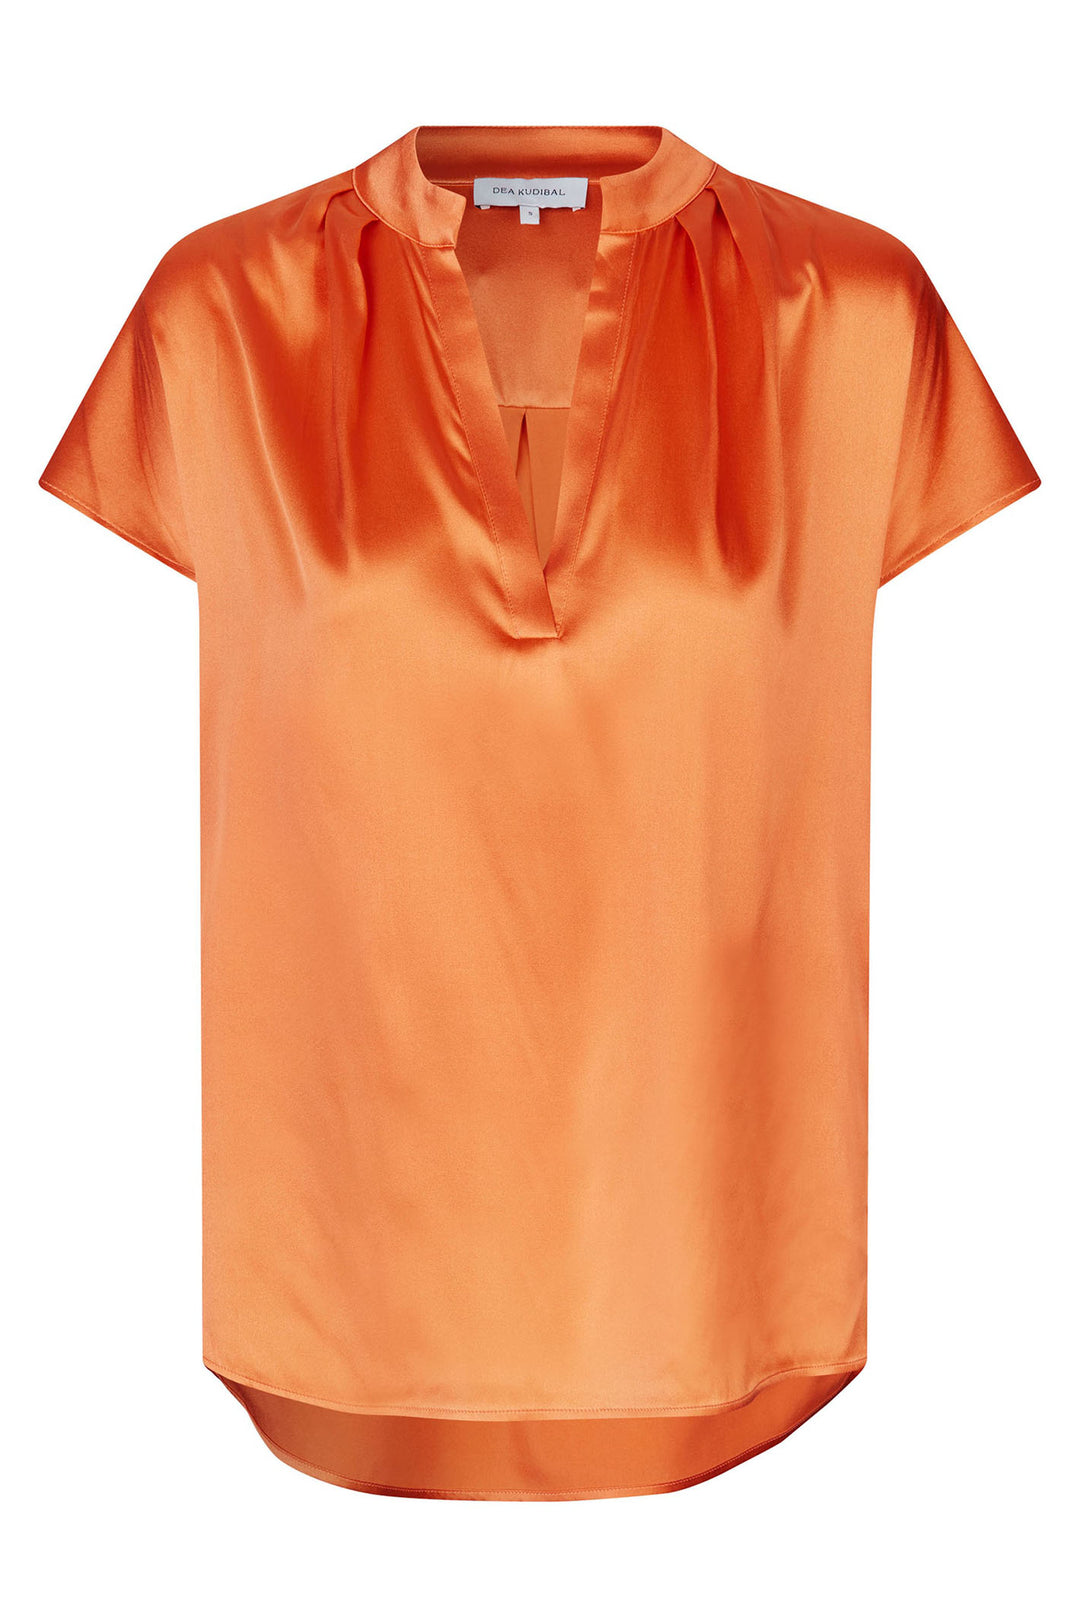 Dea Kudibal Melitadea 1580424 3583 Mandarin Orange Stretch Silk Satin Blouse - Olivia Grace Fashion